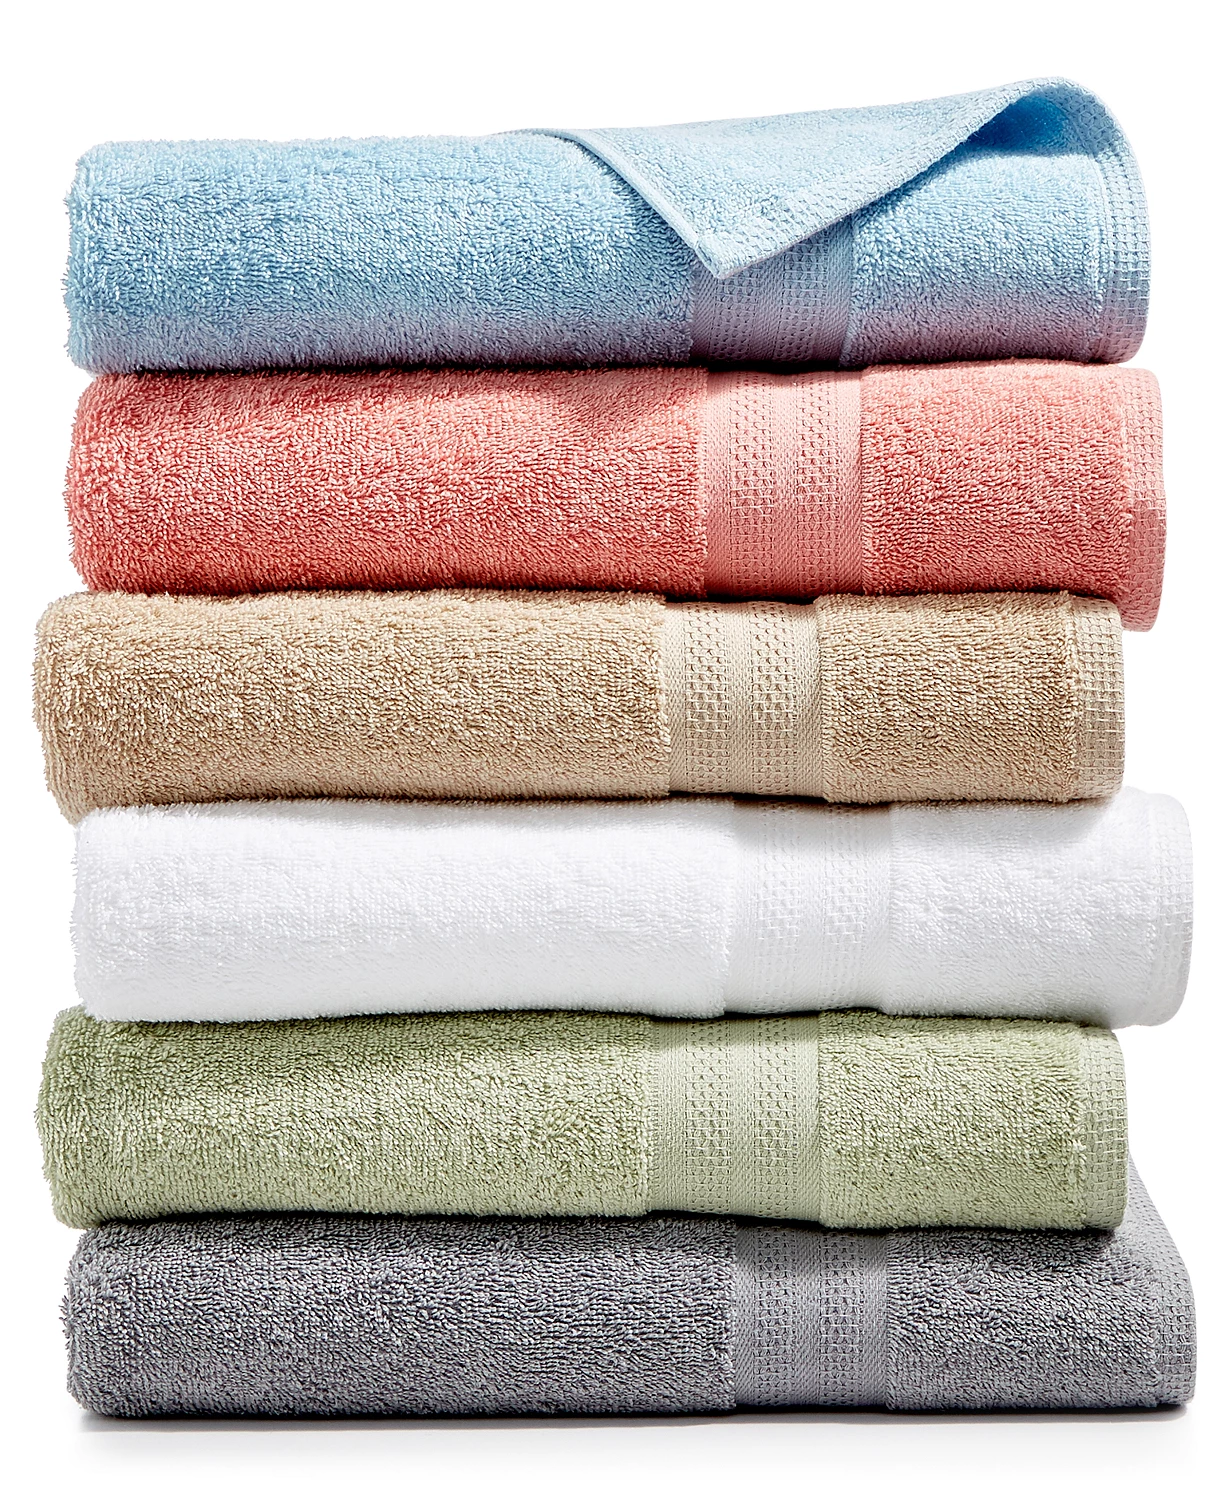 Macy’s: Sunham Soft Spun 27″ x 52″ Cotton Bath Towels $2.99